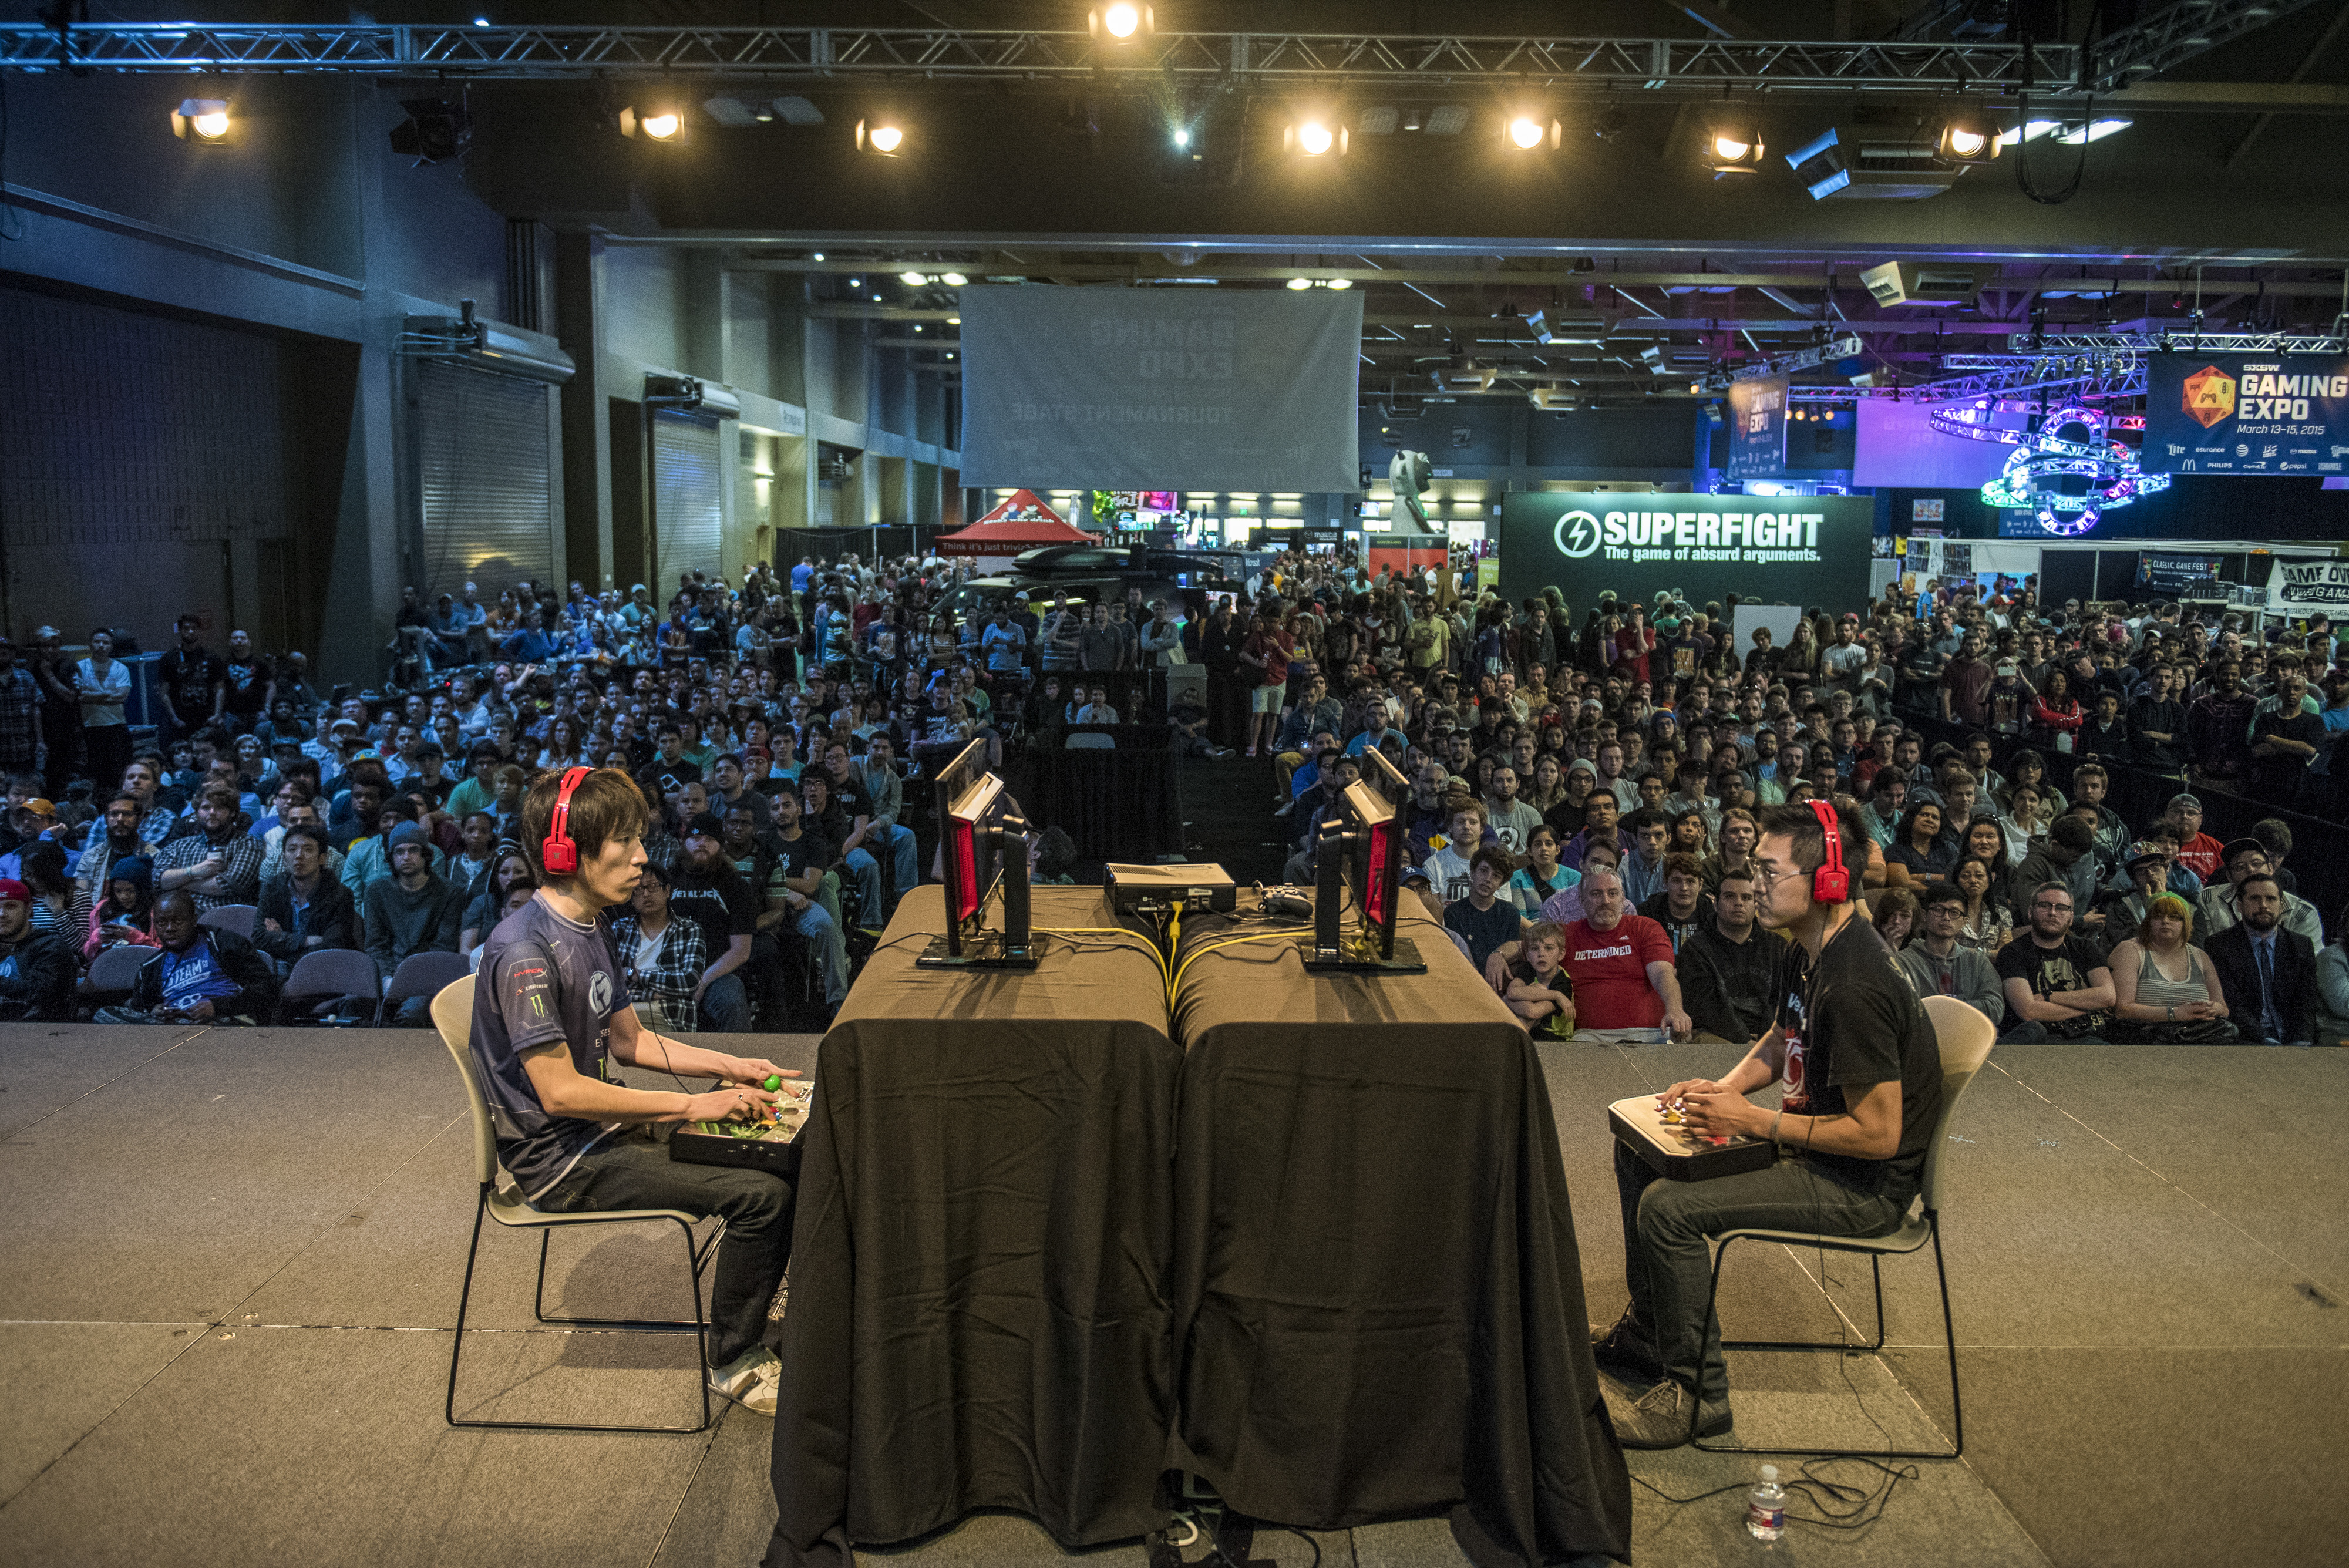 Esports tournament stage at Austin’s SXSW Gaming Expo. Photo by Merrick Ales, courtesy of SXSW.